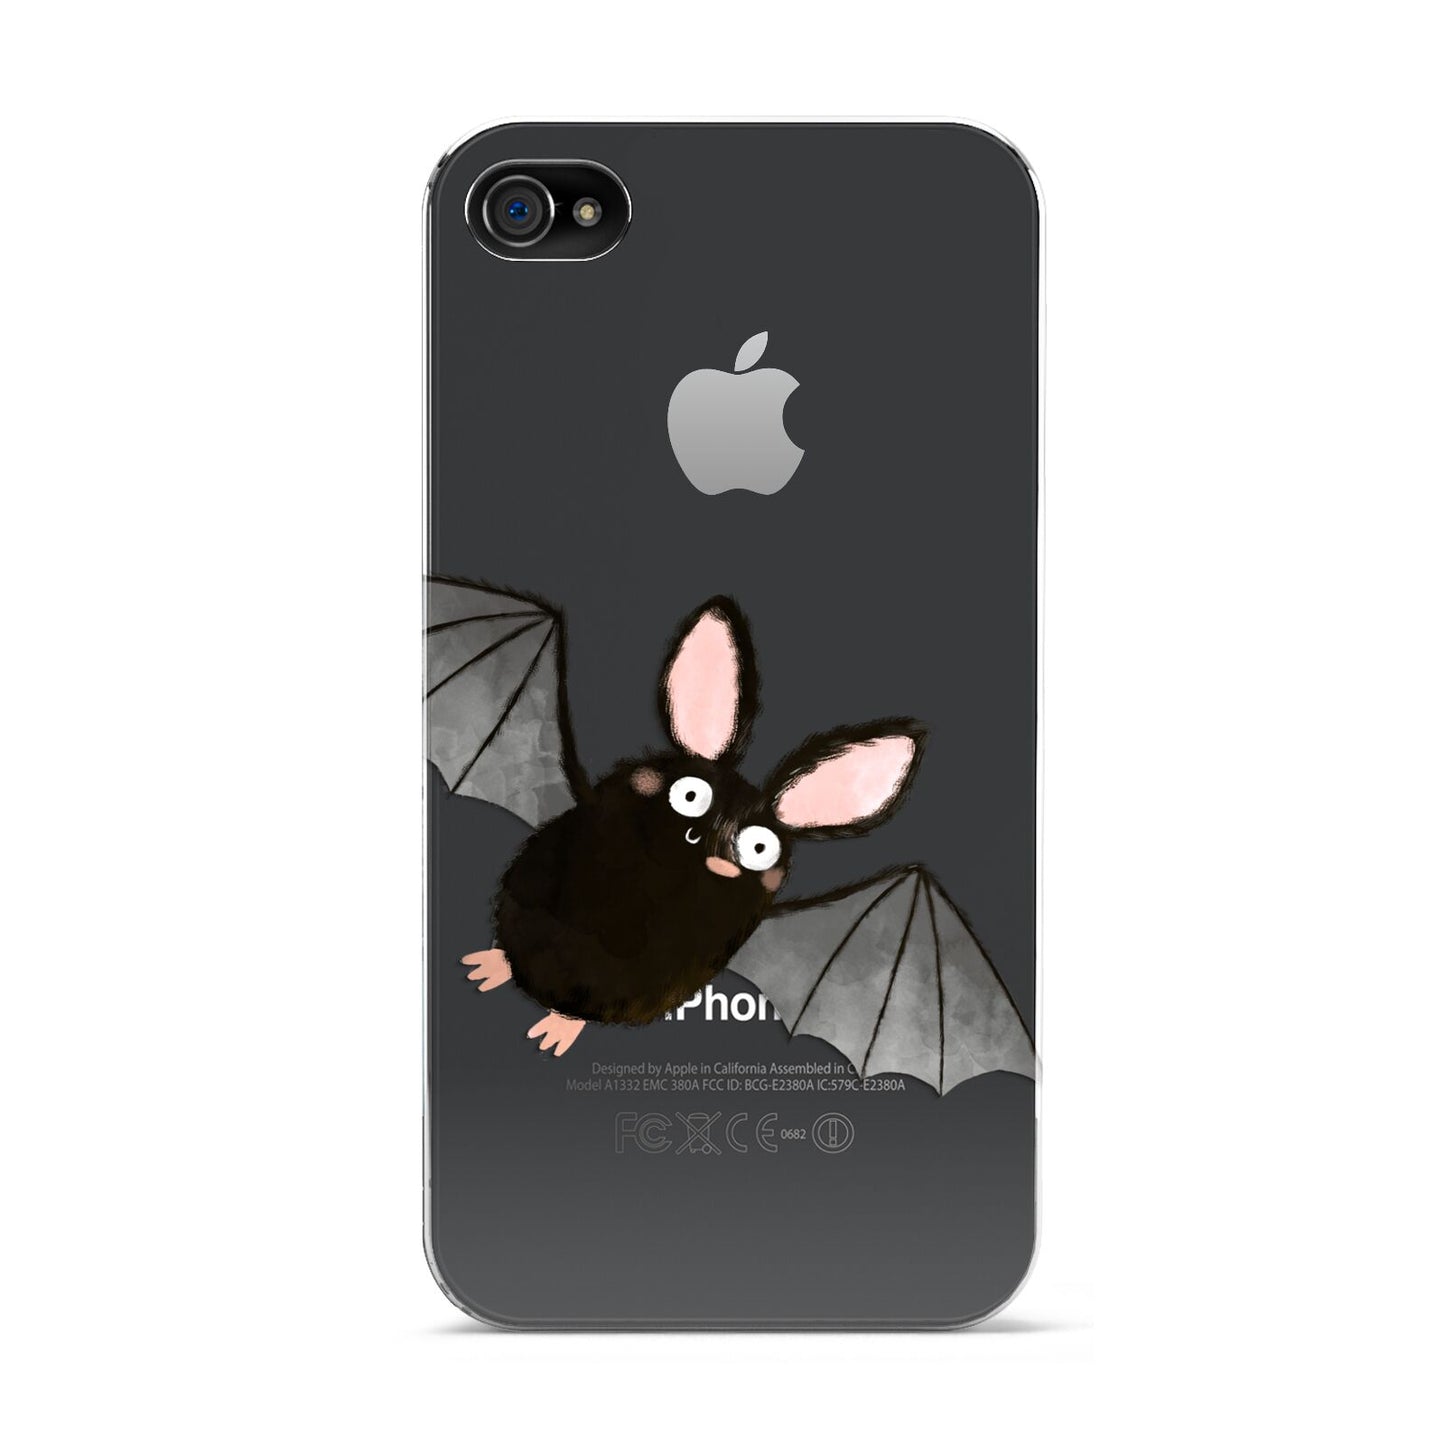 Bat Illustration Apple iPhone 4s Case